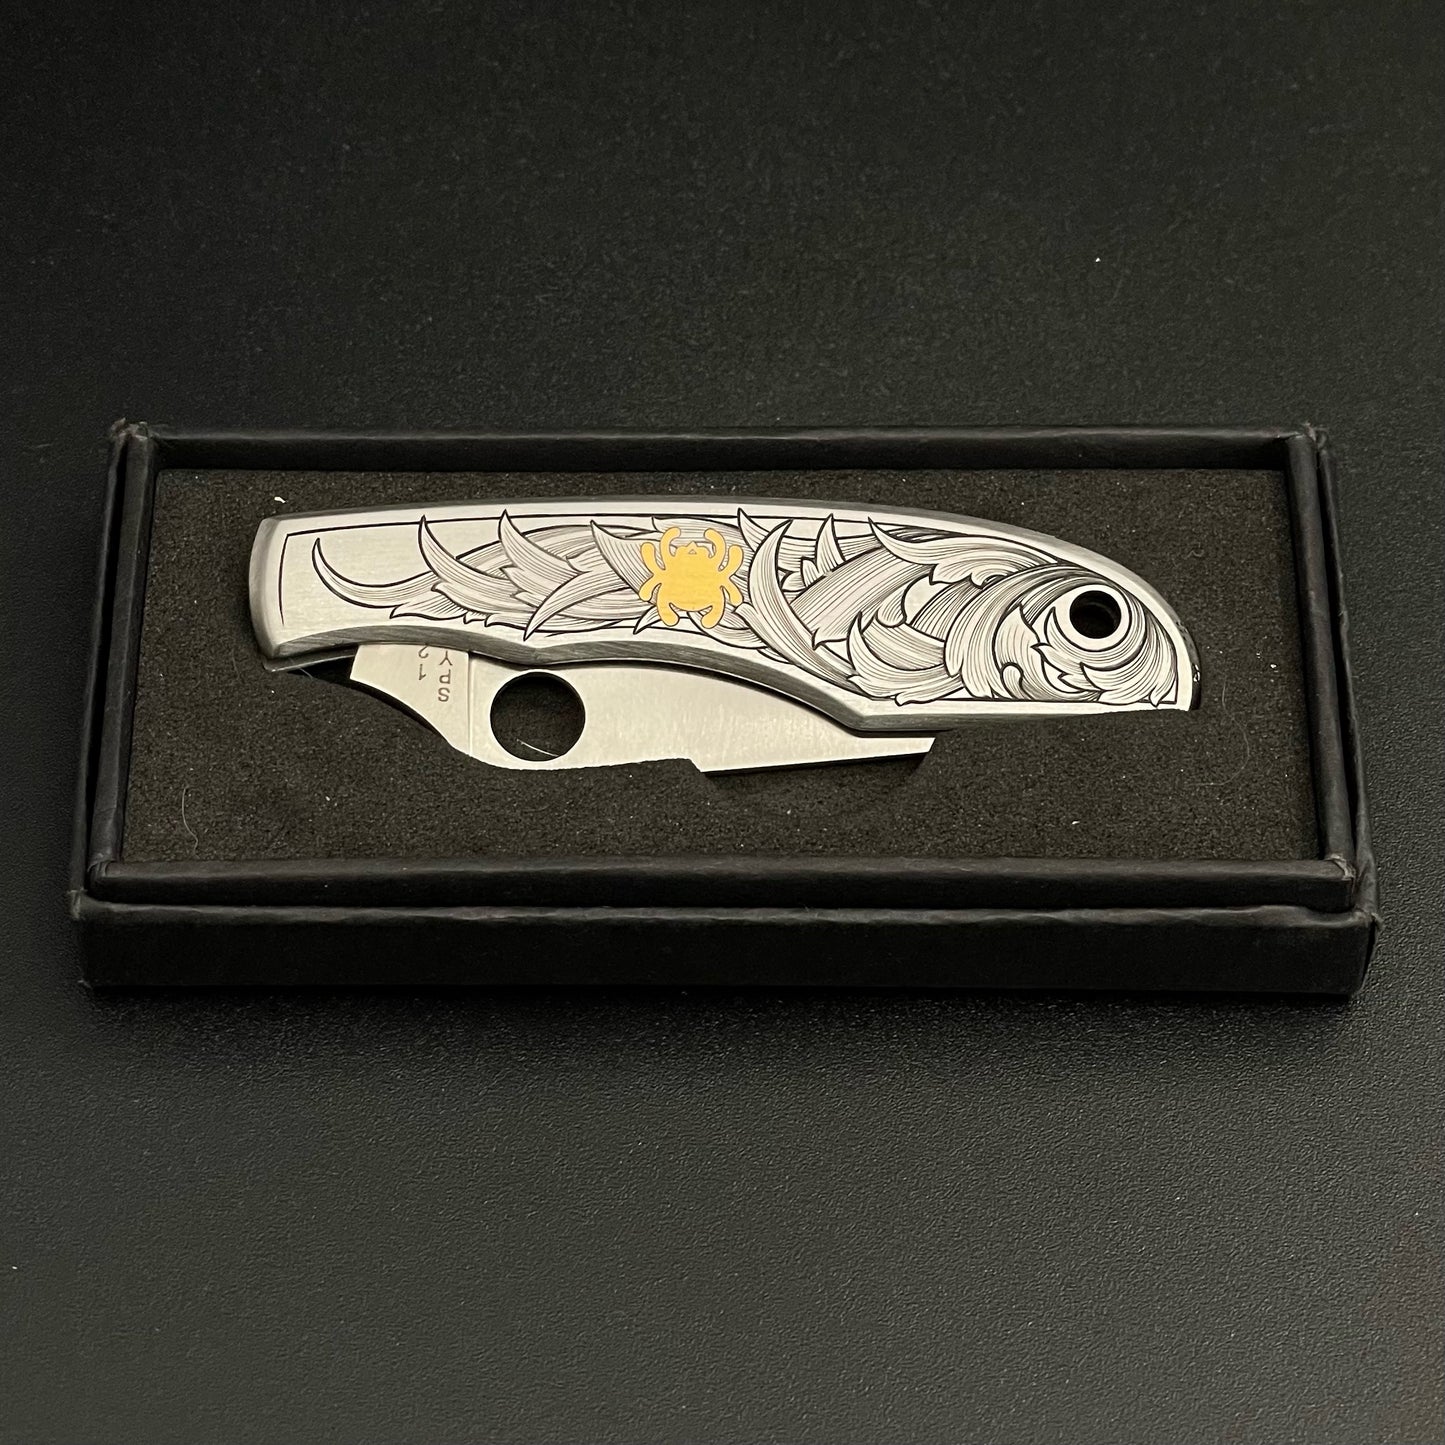 Elaborate hand-engraved Spyderco Pocket Knife - Grasshopper size